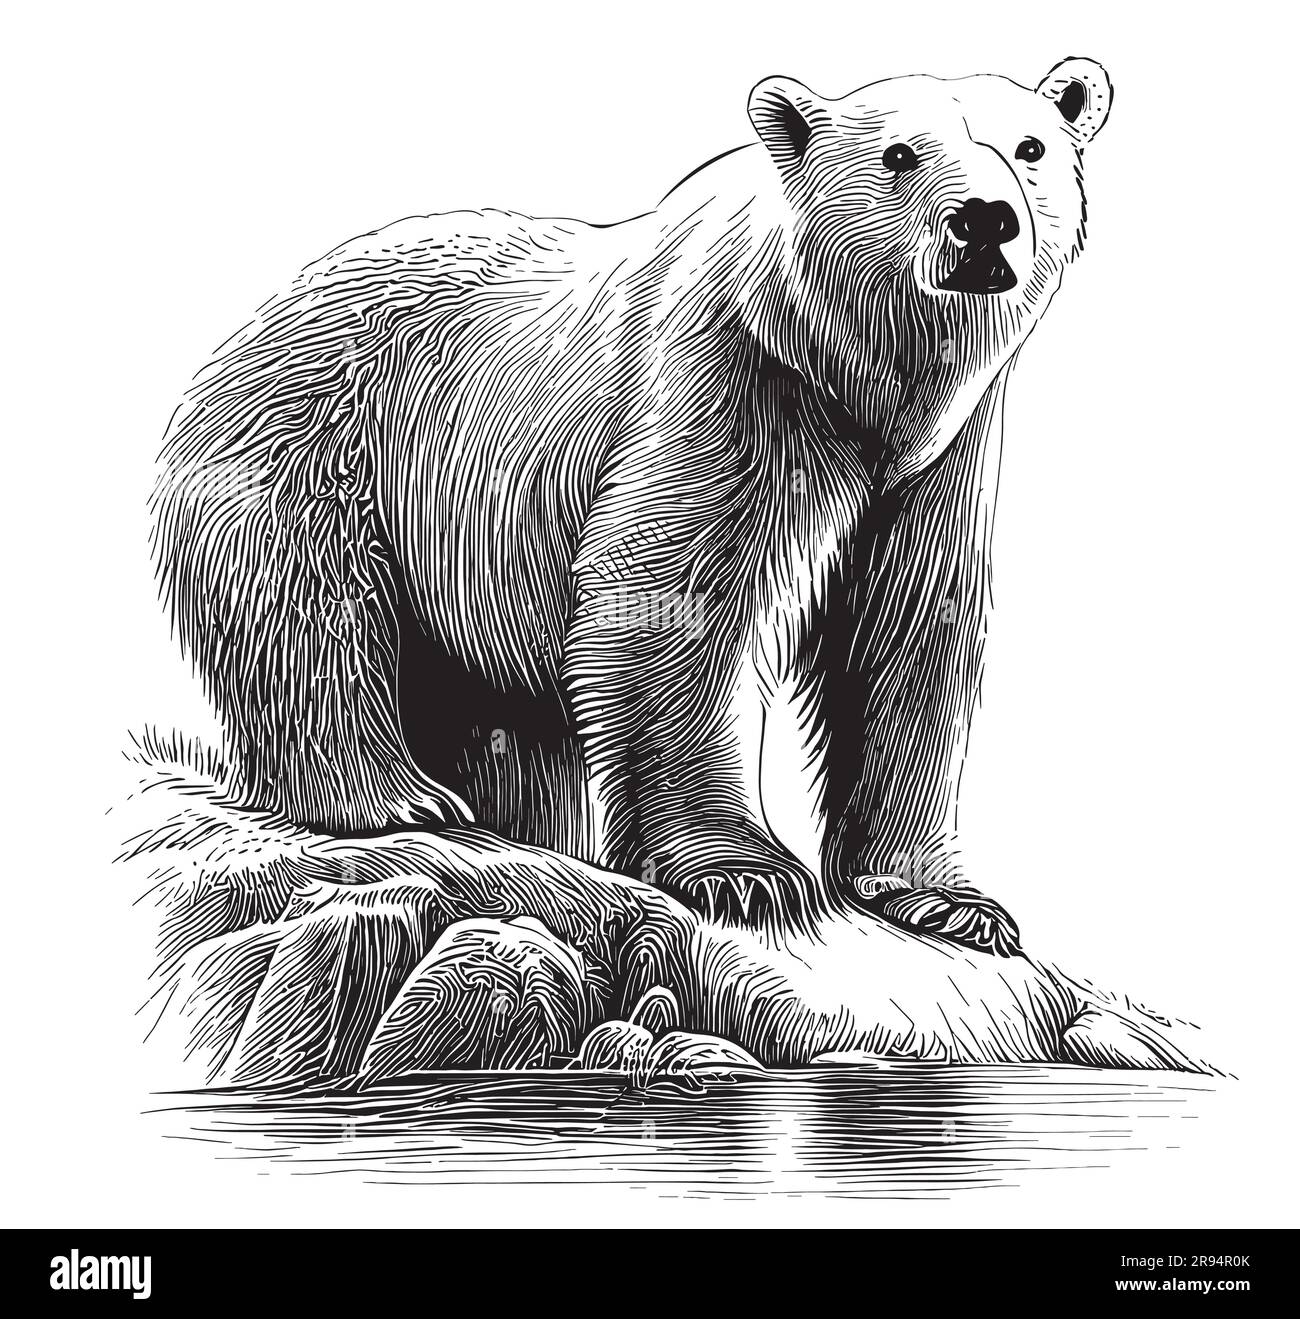 Polar Bear Sketches by Kyndrii on DeviantArt